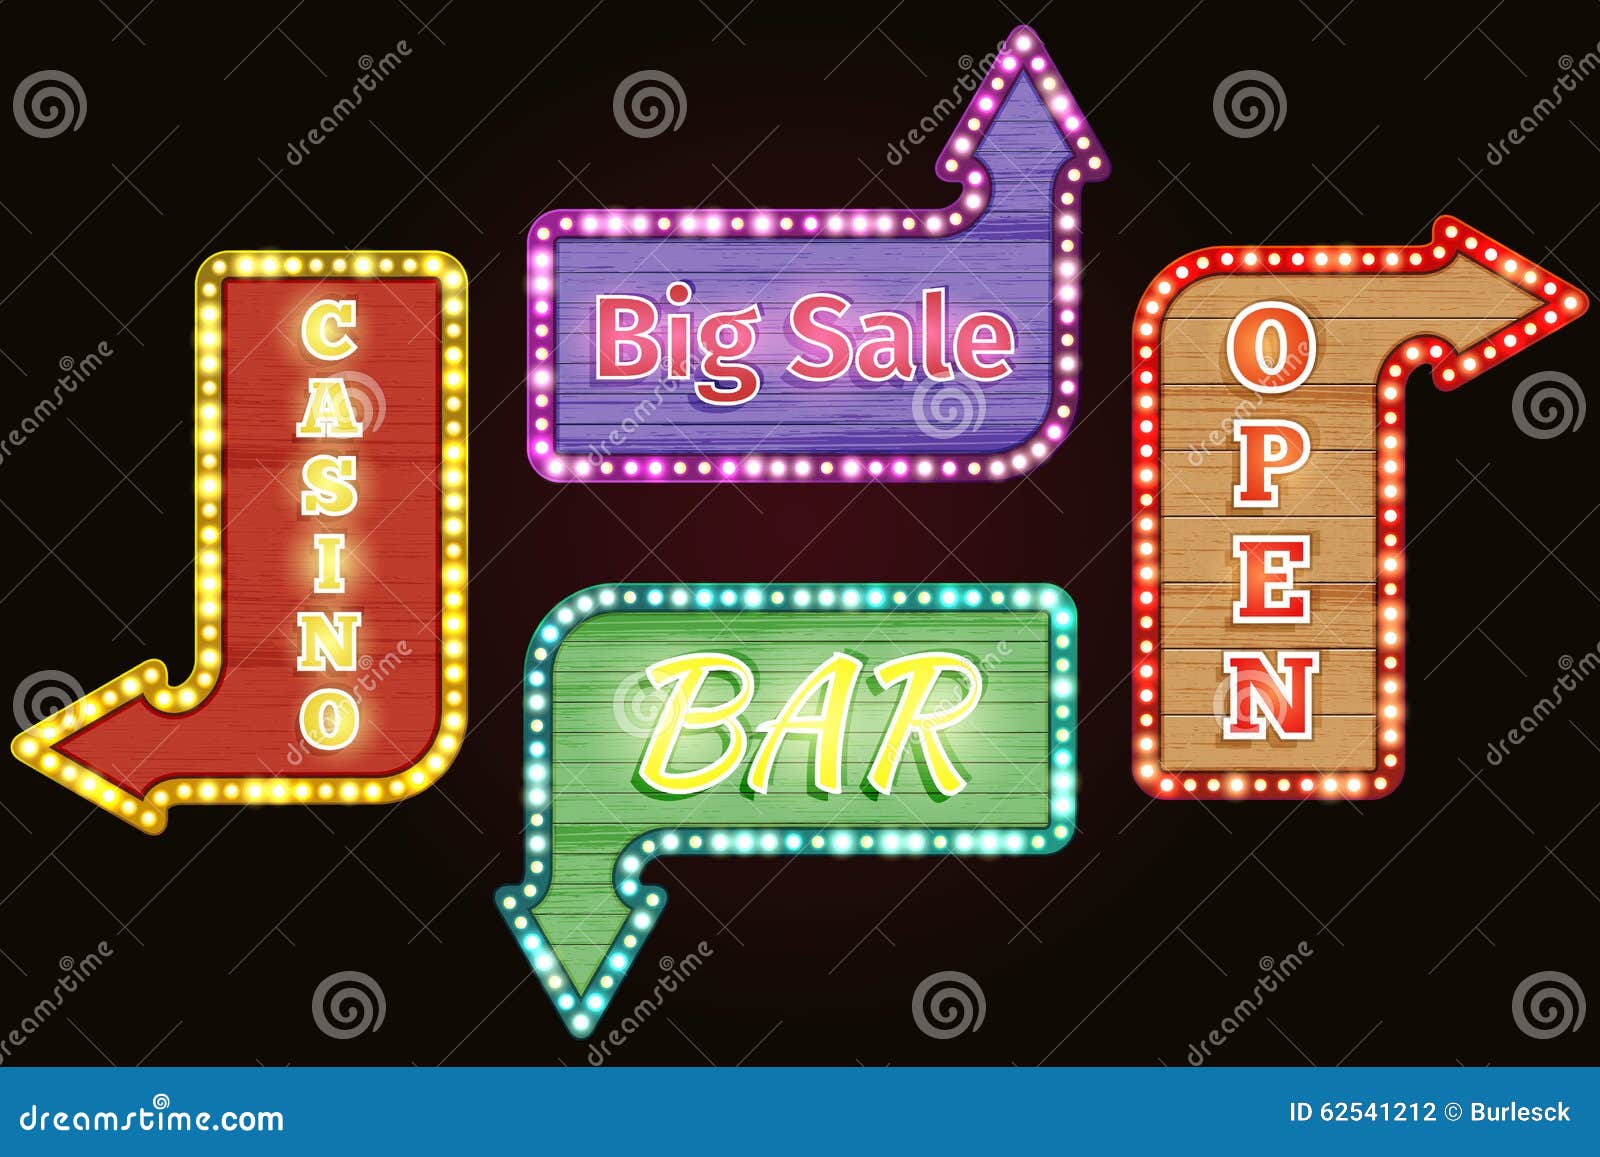 Open, Big Sale, Casino, Bar Retro Neon Signs Stock Vector